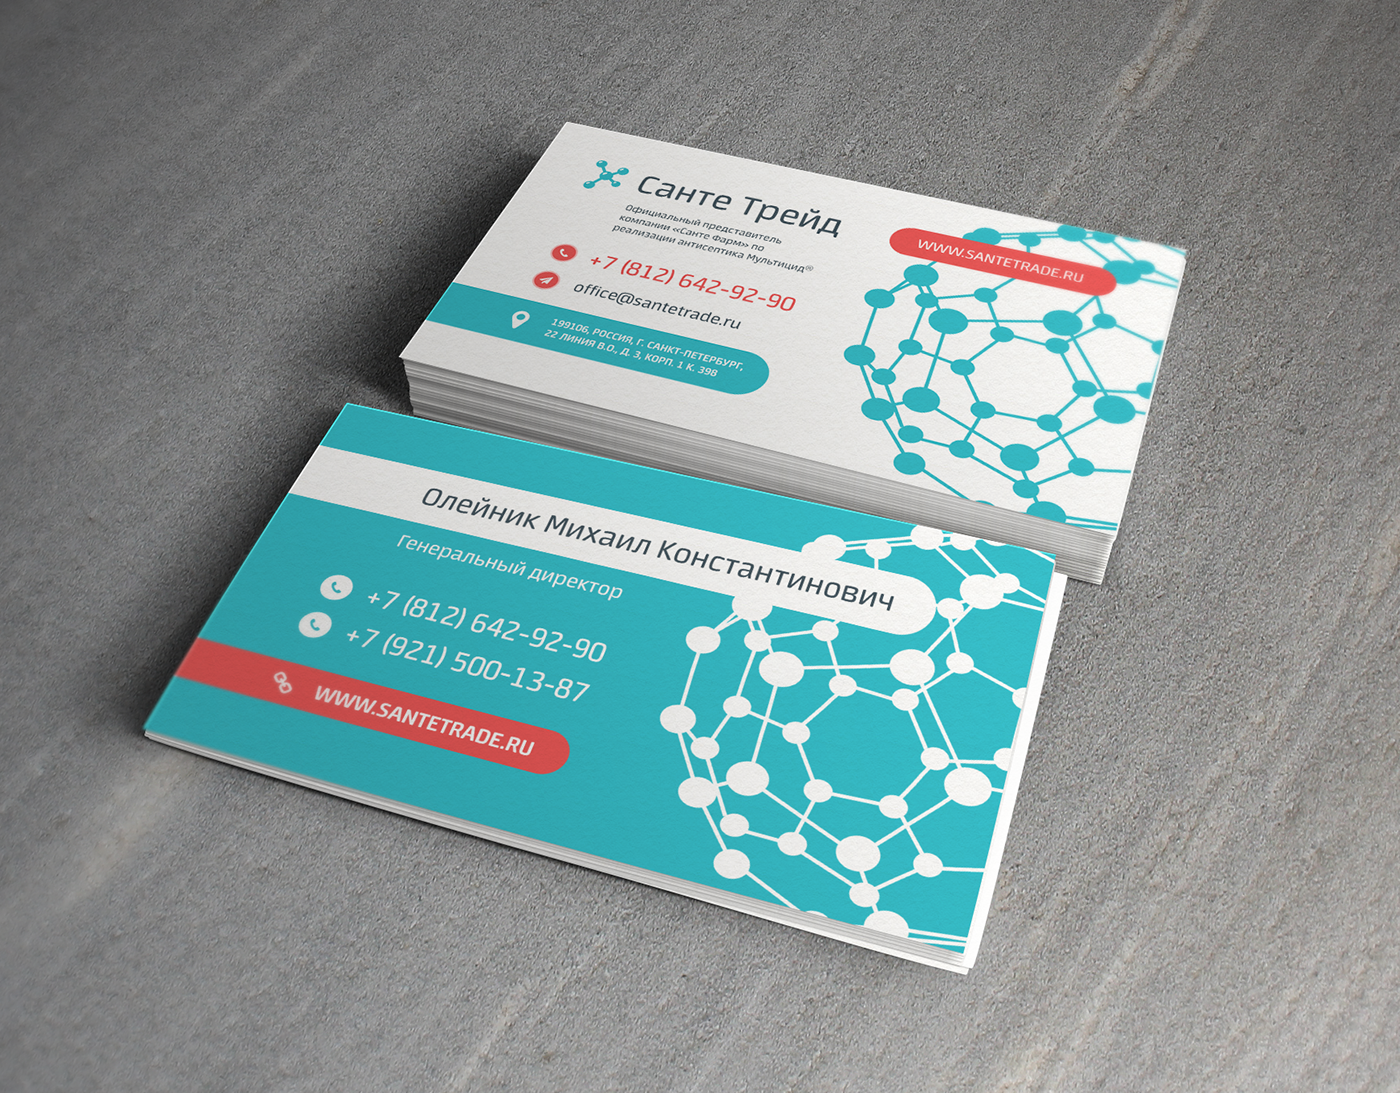 business card card photoshop psd Mockup portfolio design Freelance Order press